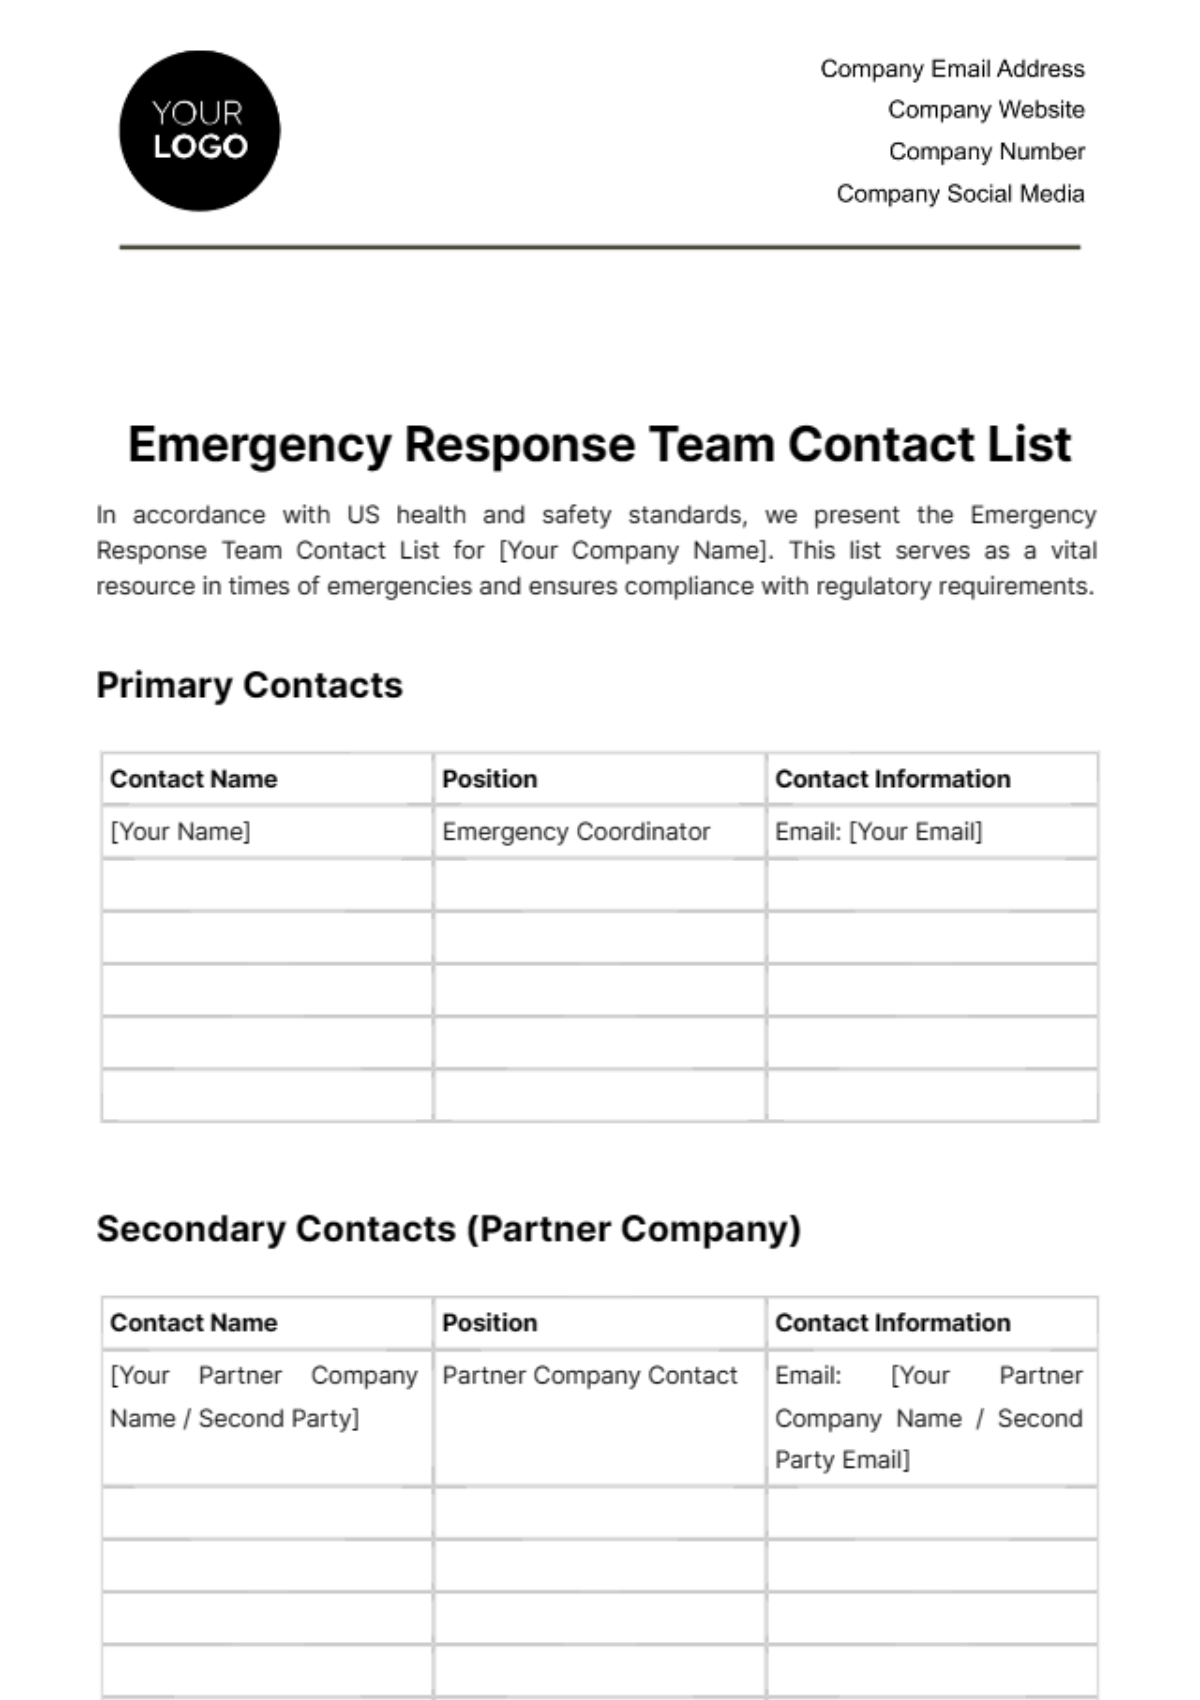 Emergency Response Team Contact List Template